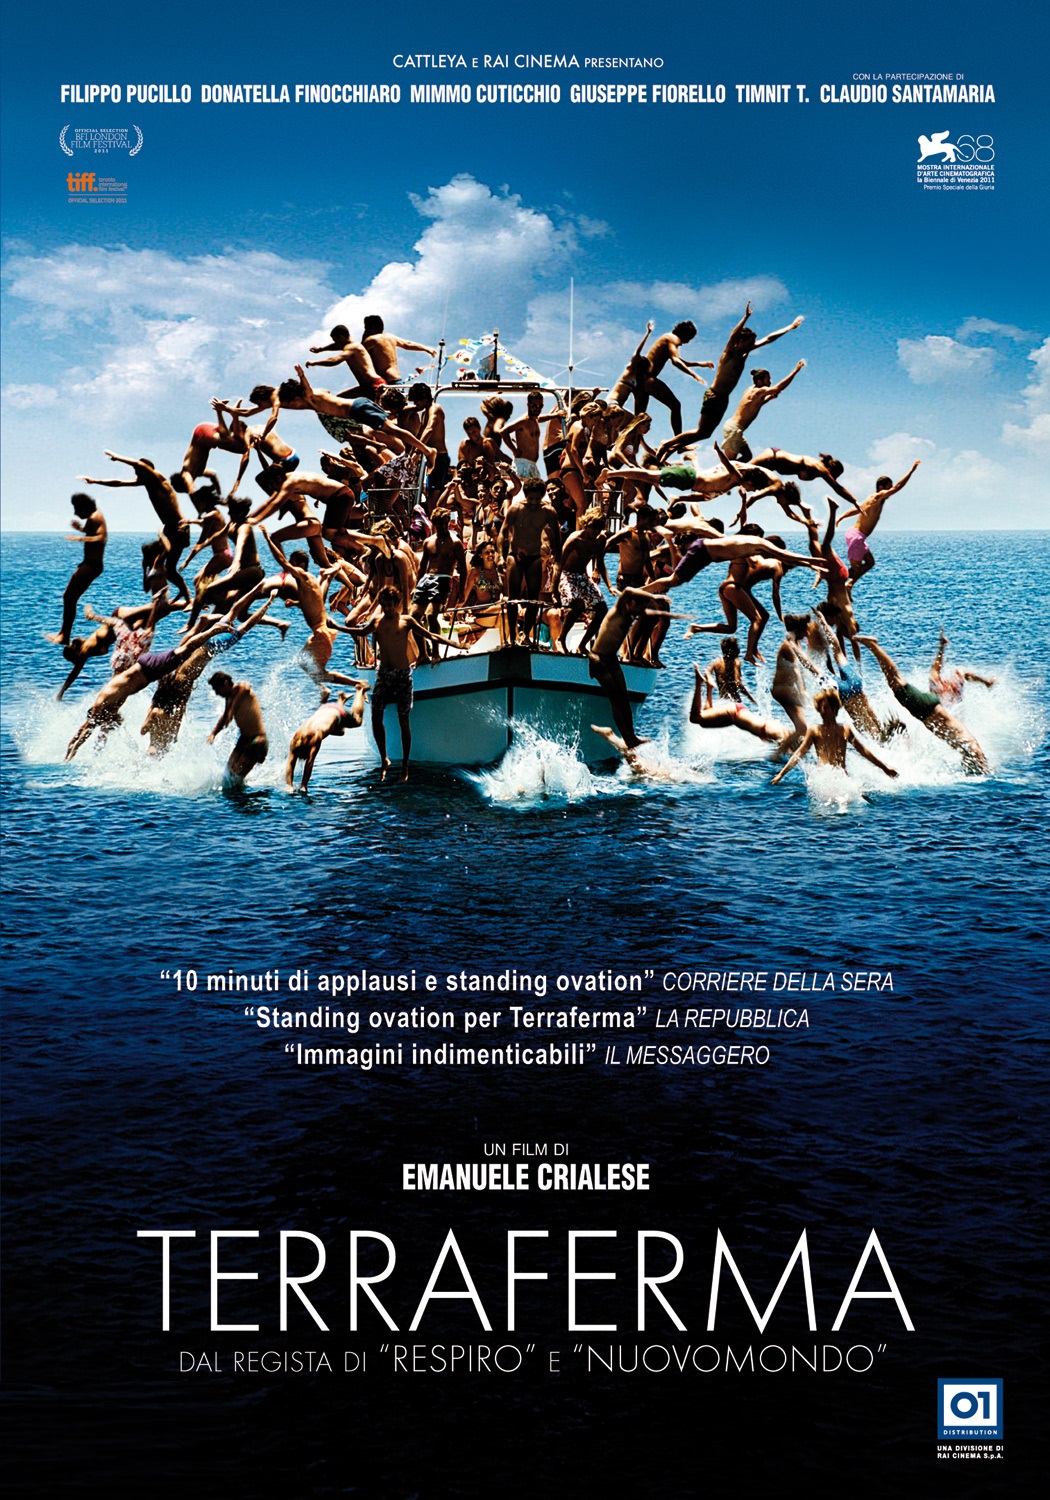 Terraferma [HD] (2011)